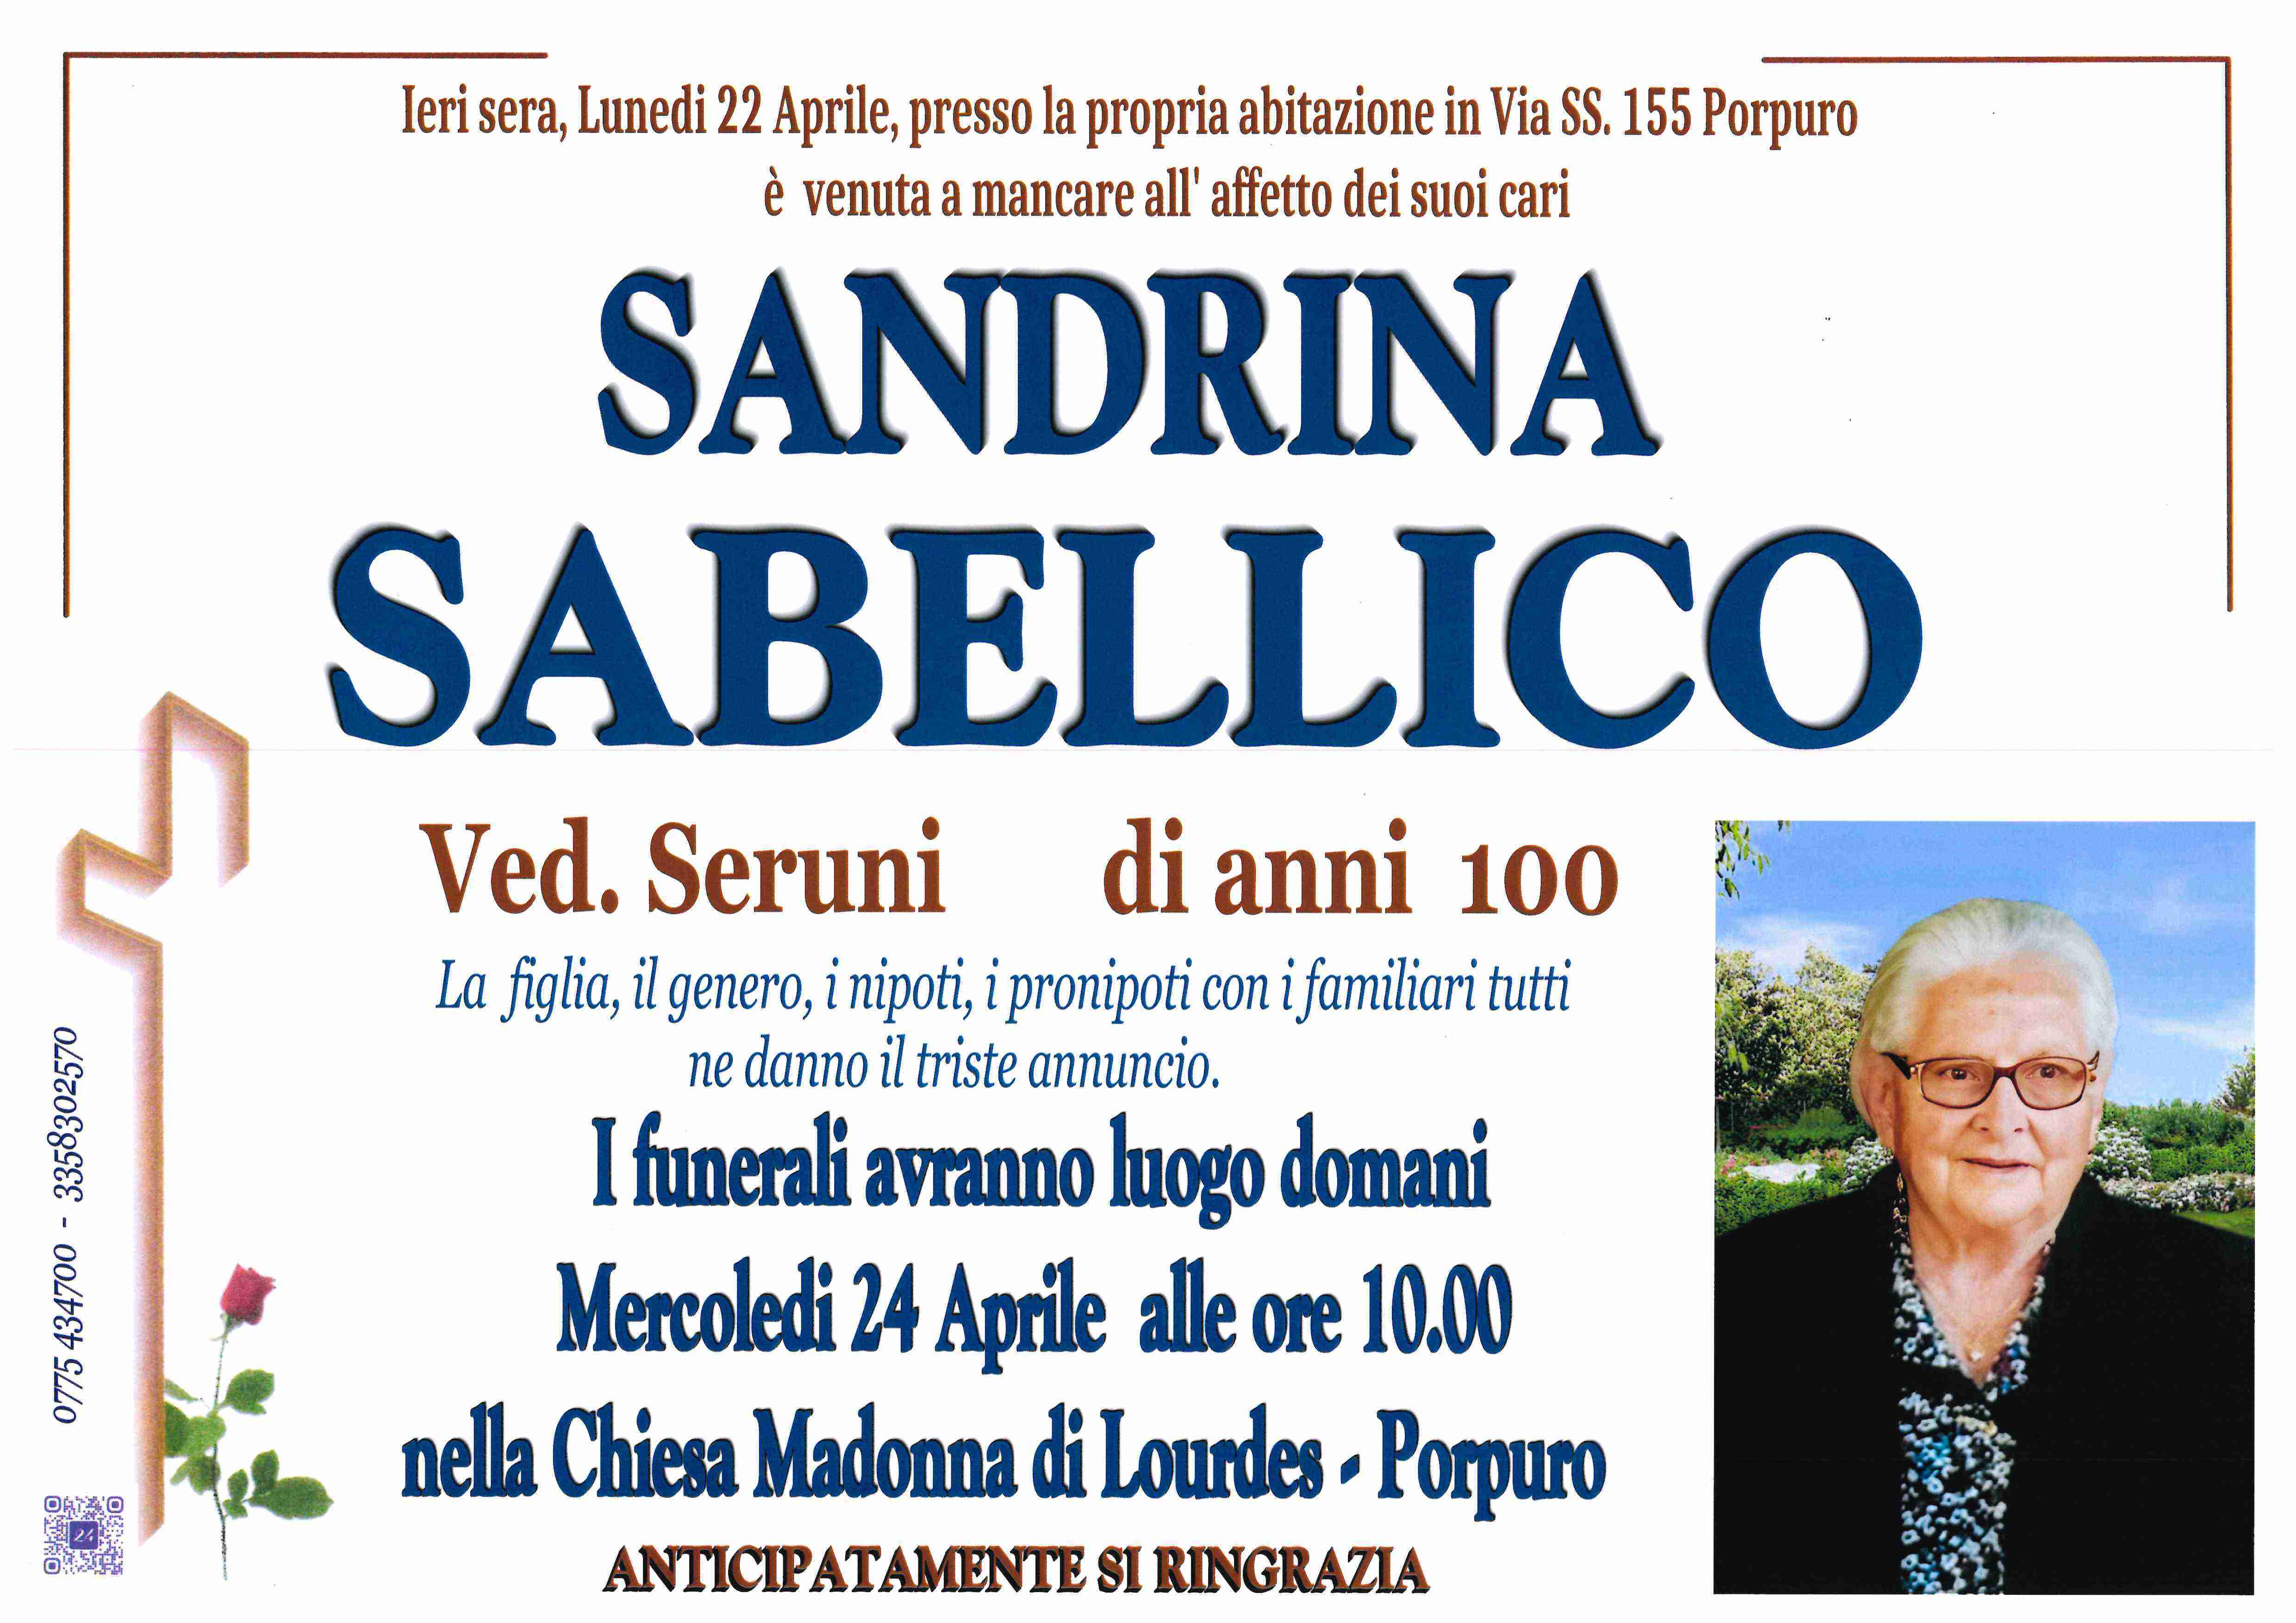 Sandrina Sabellico